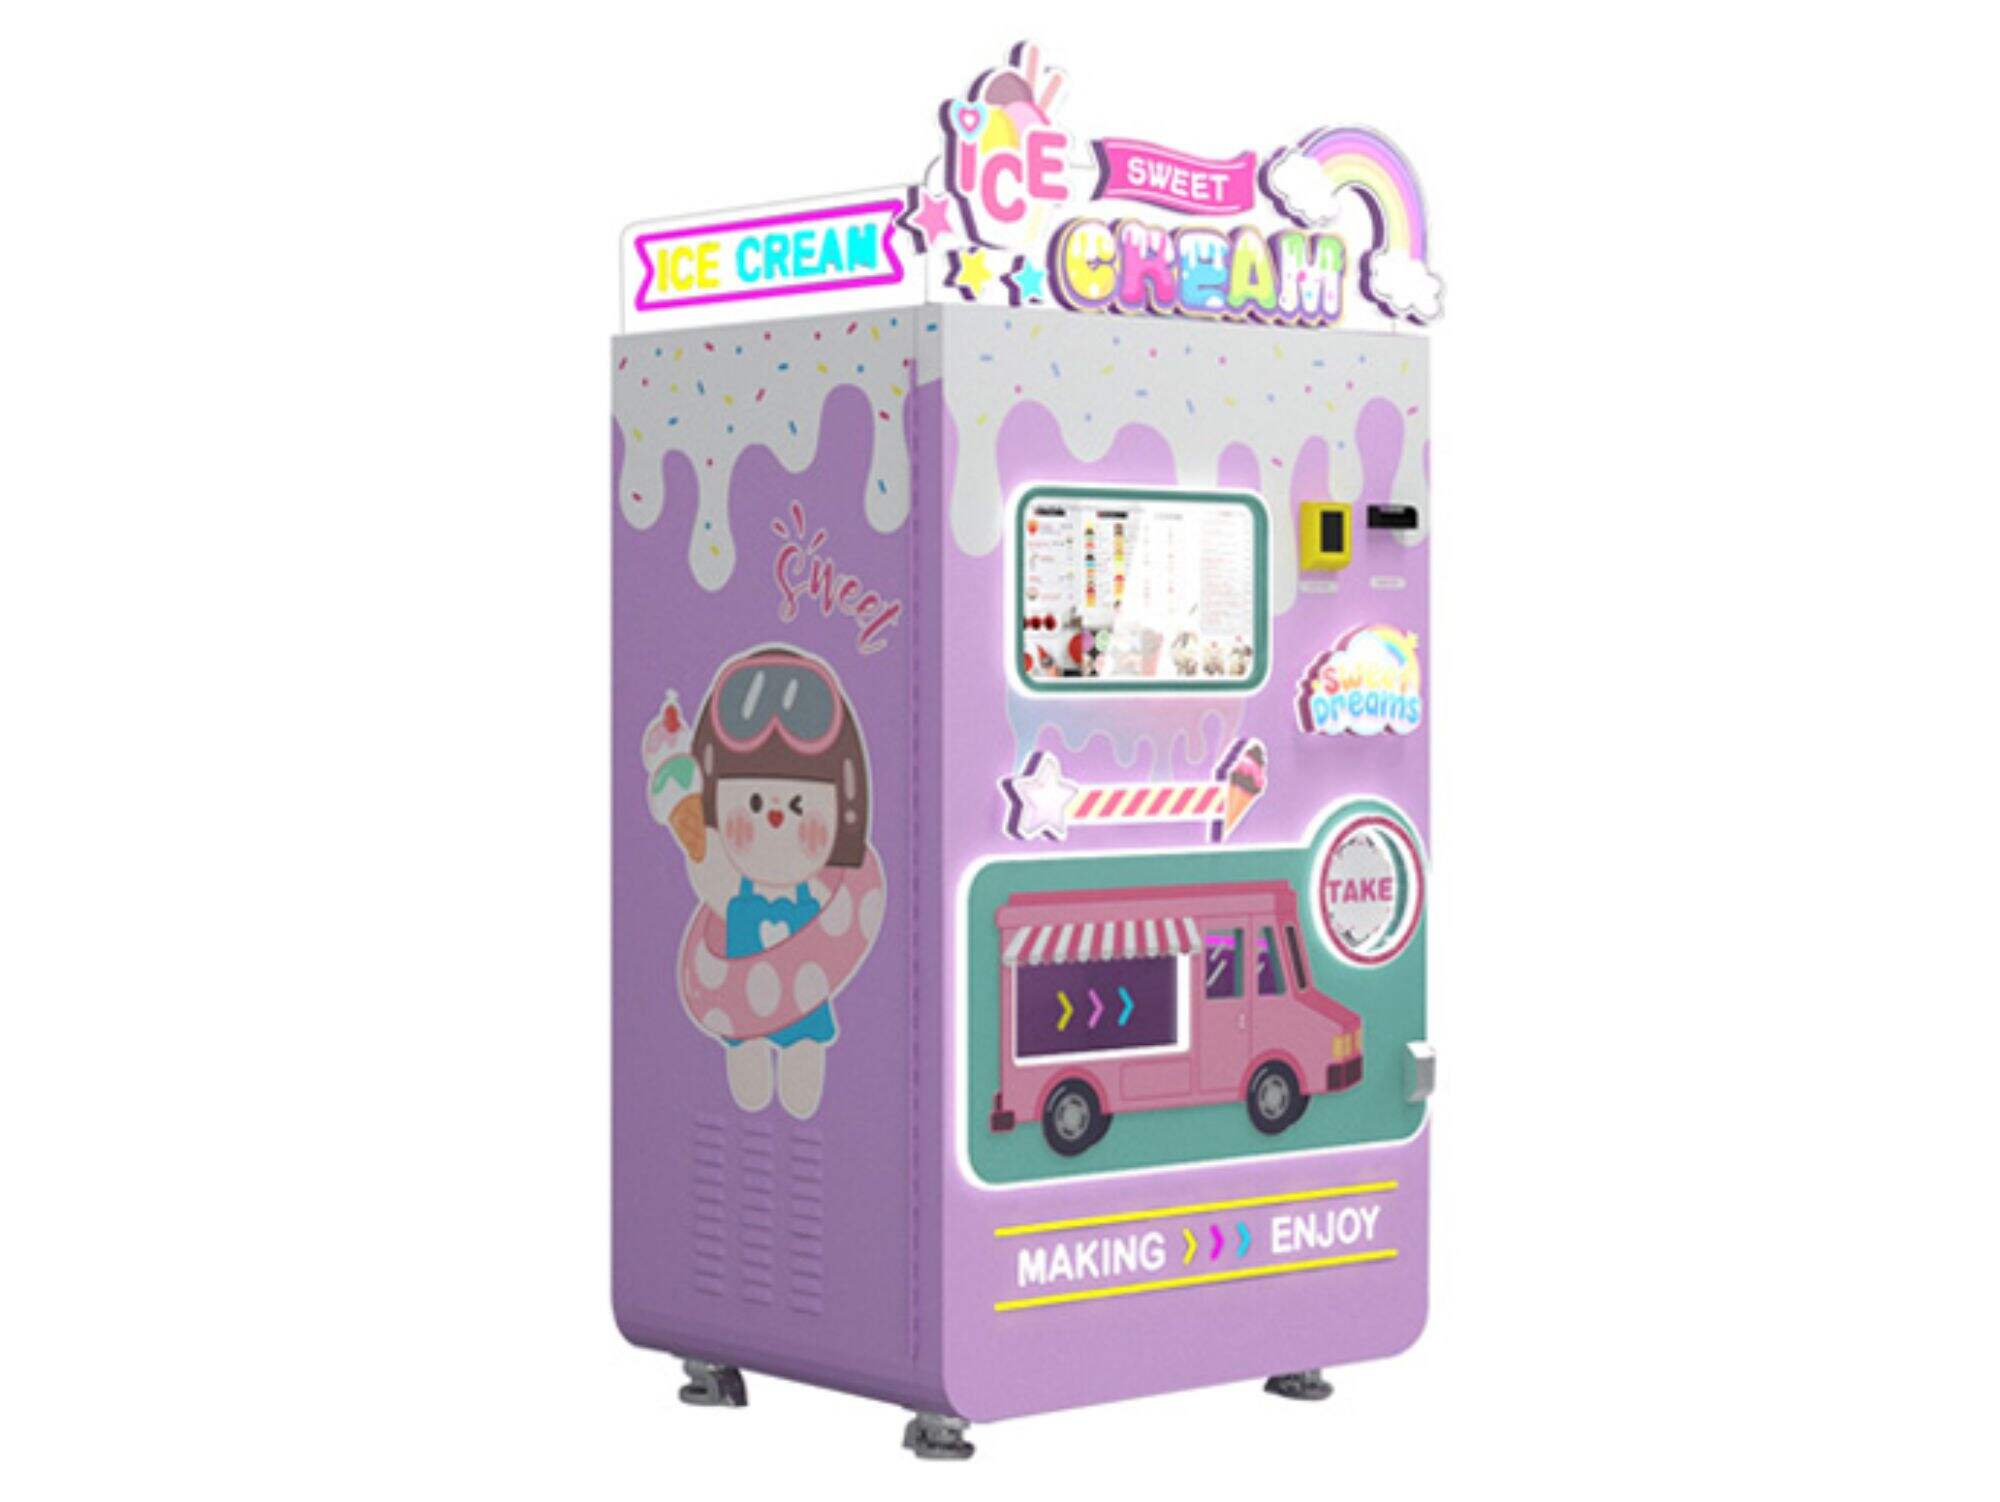 Automatic Ice Cream Vending Machine